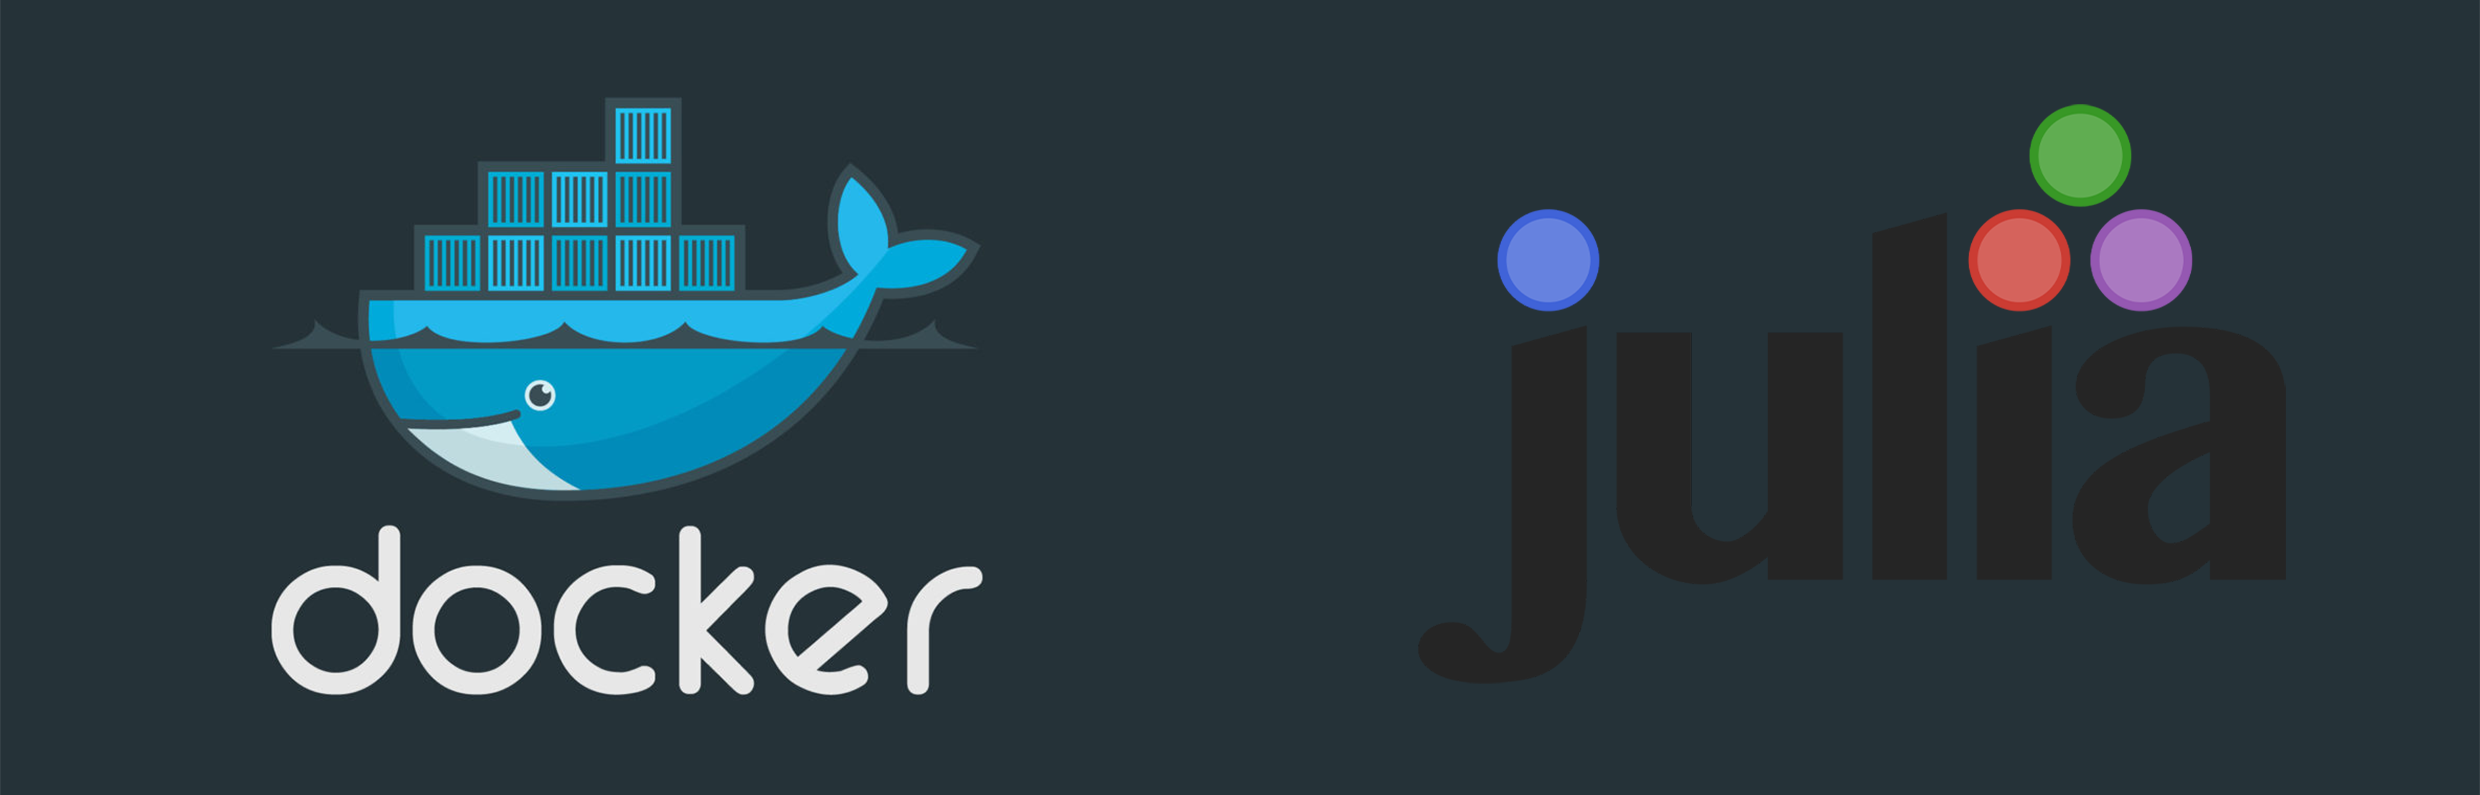 Julia and Docker integration